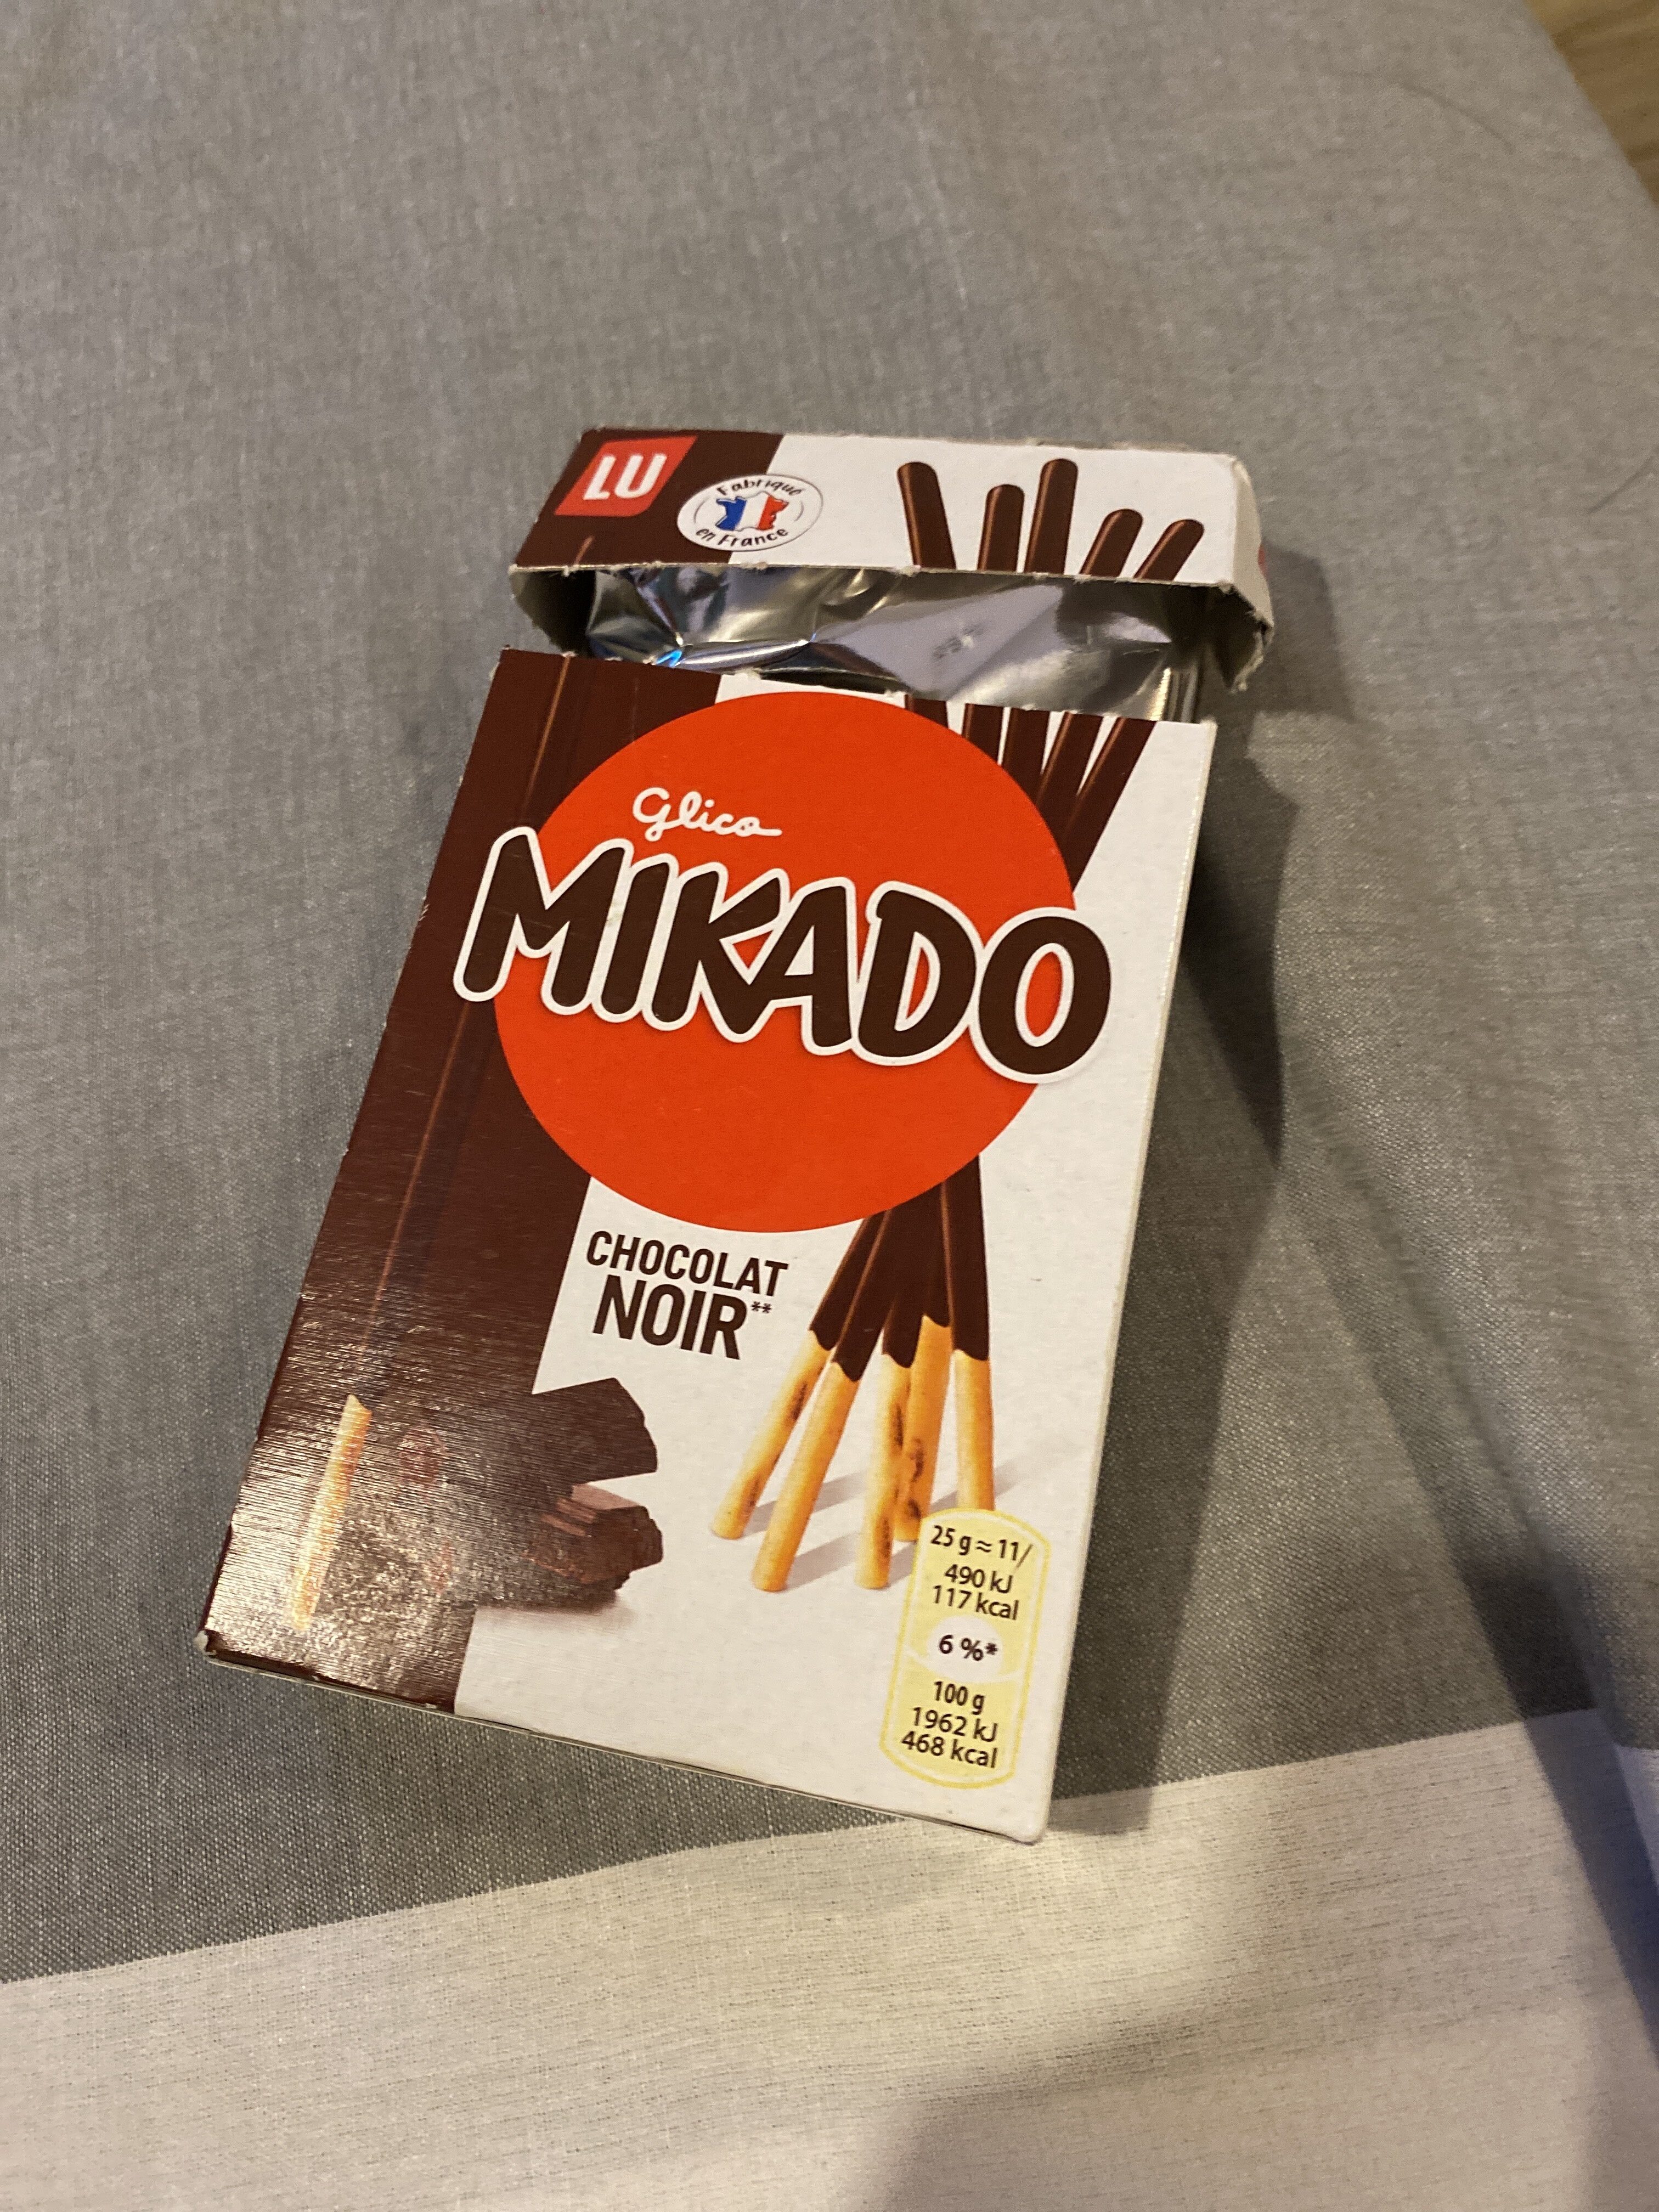 Mikado chocolat noir - Product - fr